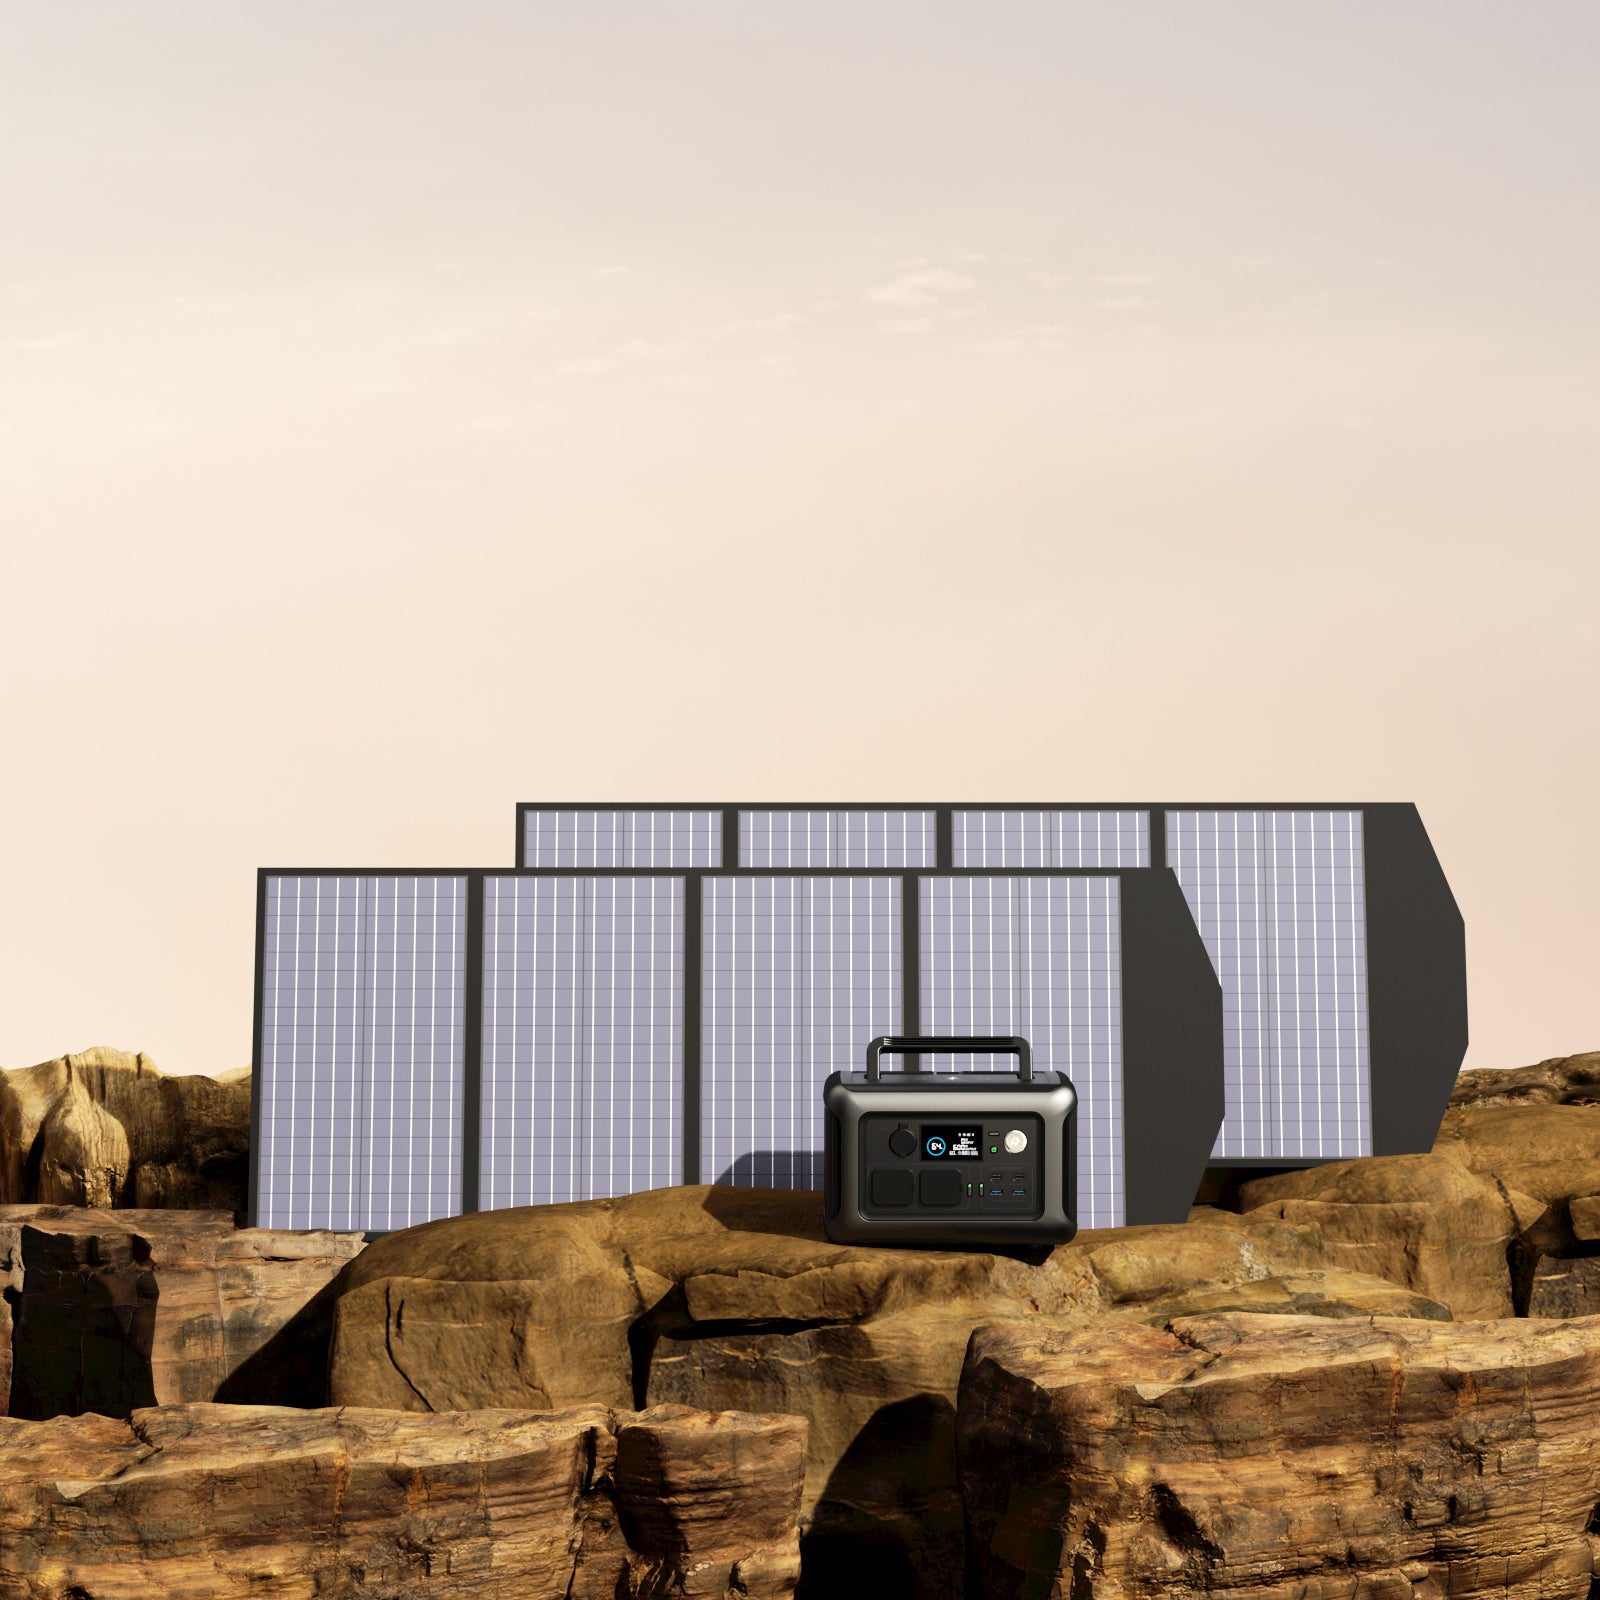 r600-black-solar-generator-kit-sp029-200w-panel-2-uk.jpg